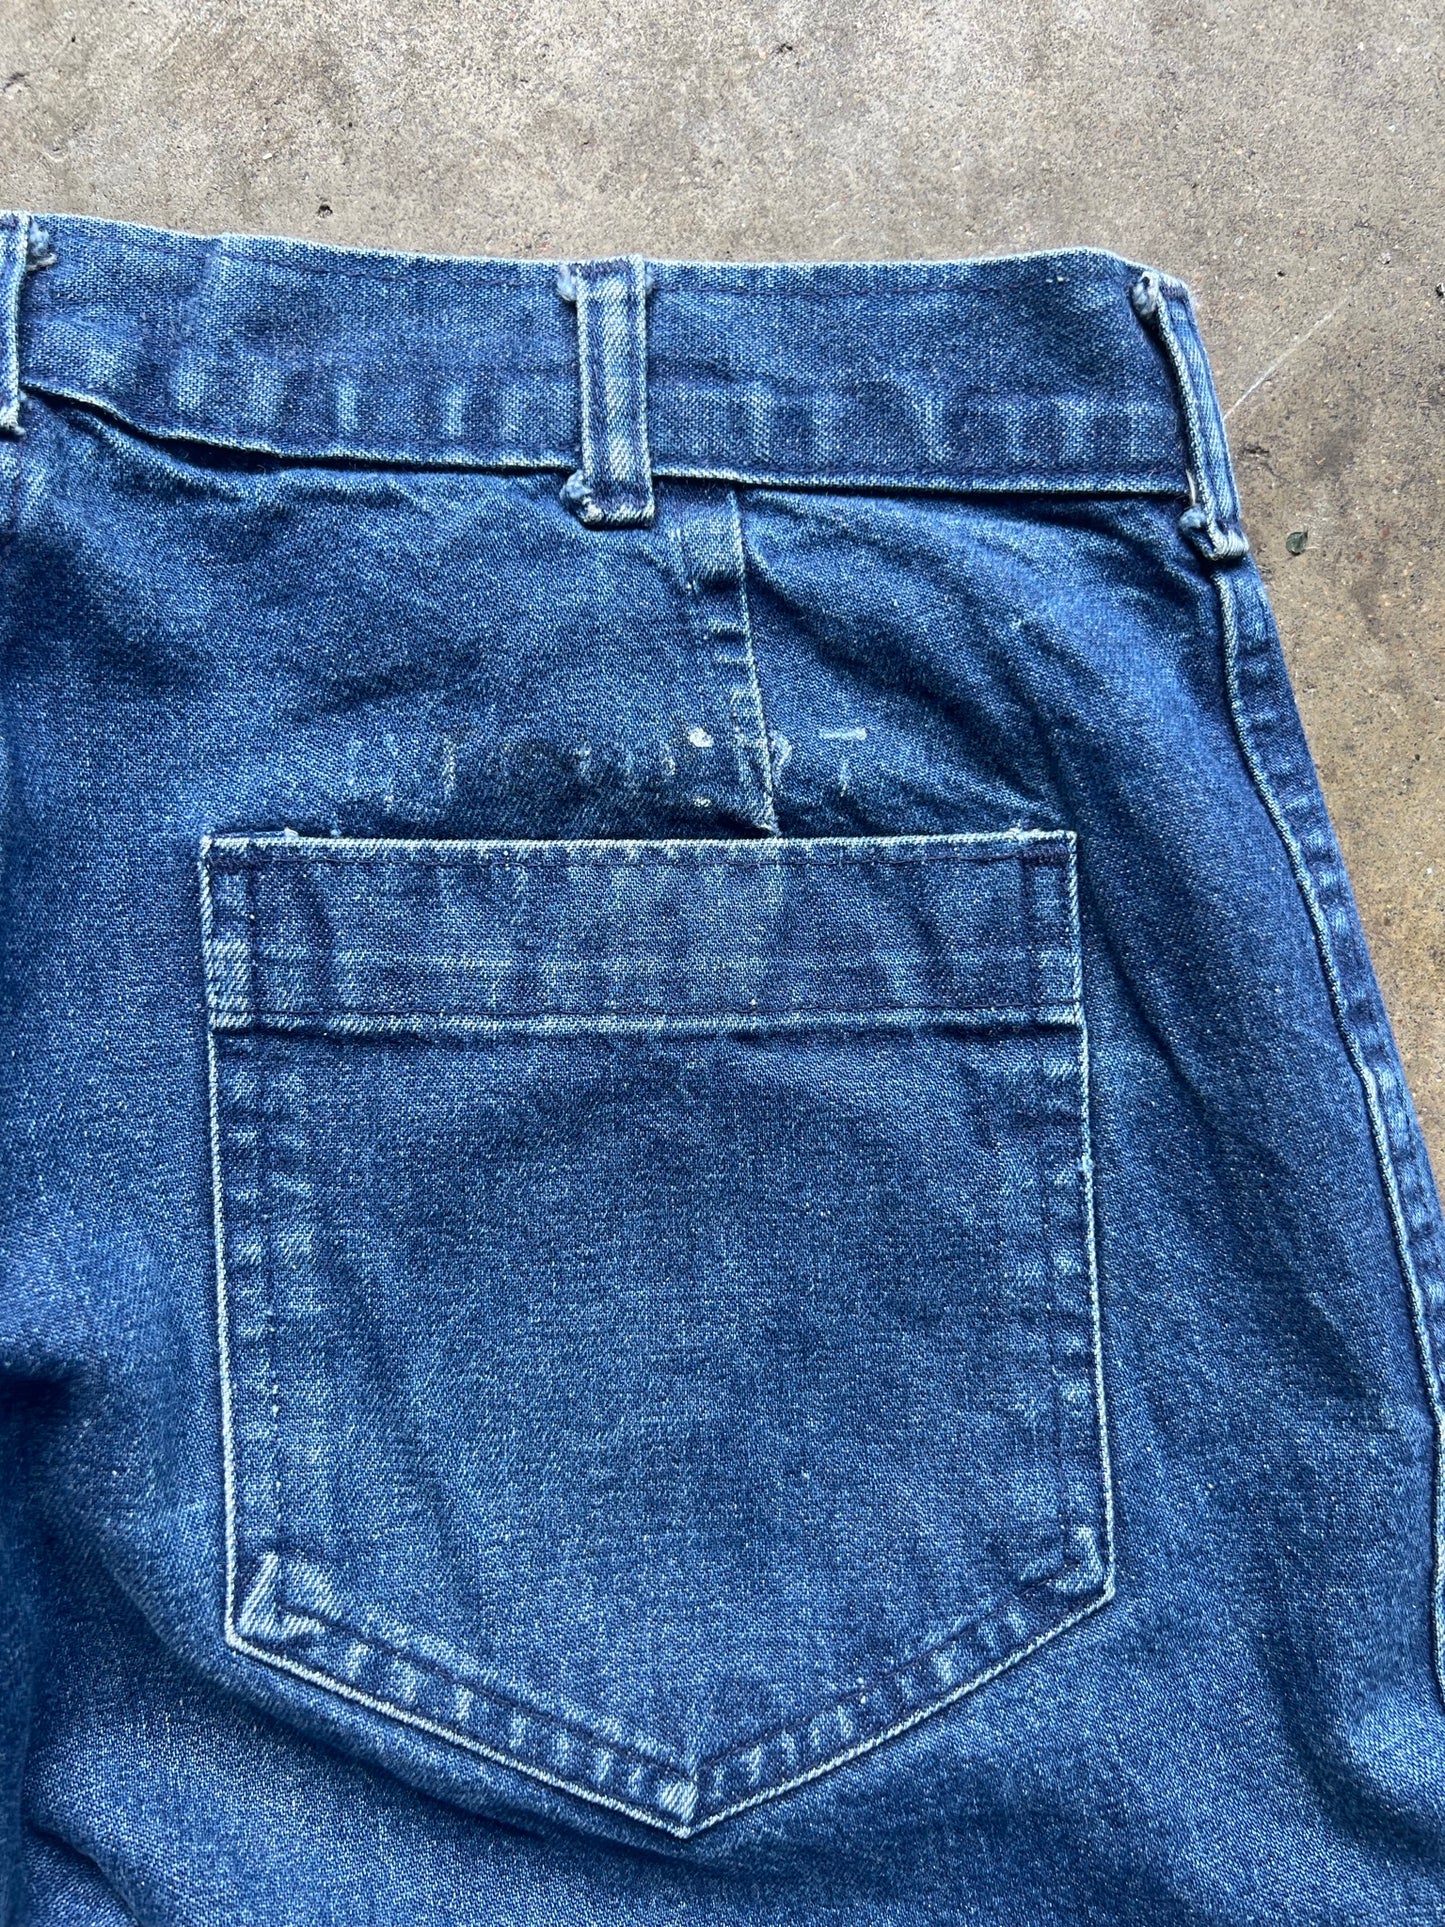 Hand Reworked Vintage Patchwork Denim Seafarers Jeans by D. Turner Sz  34x30